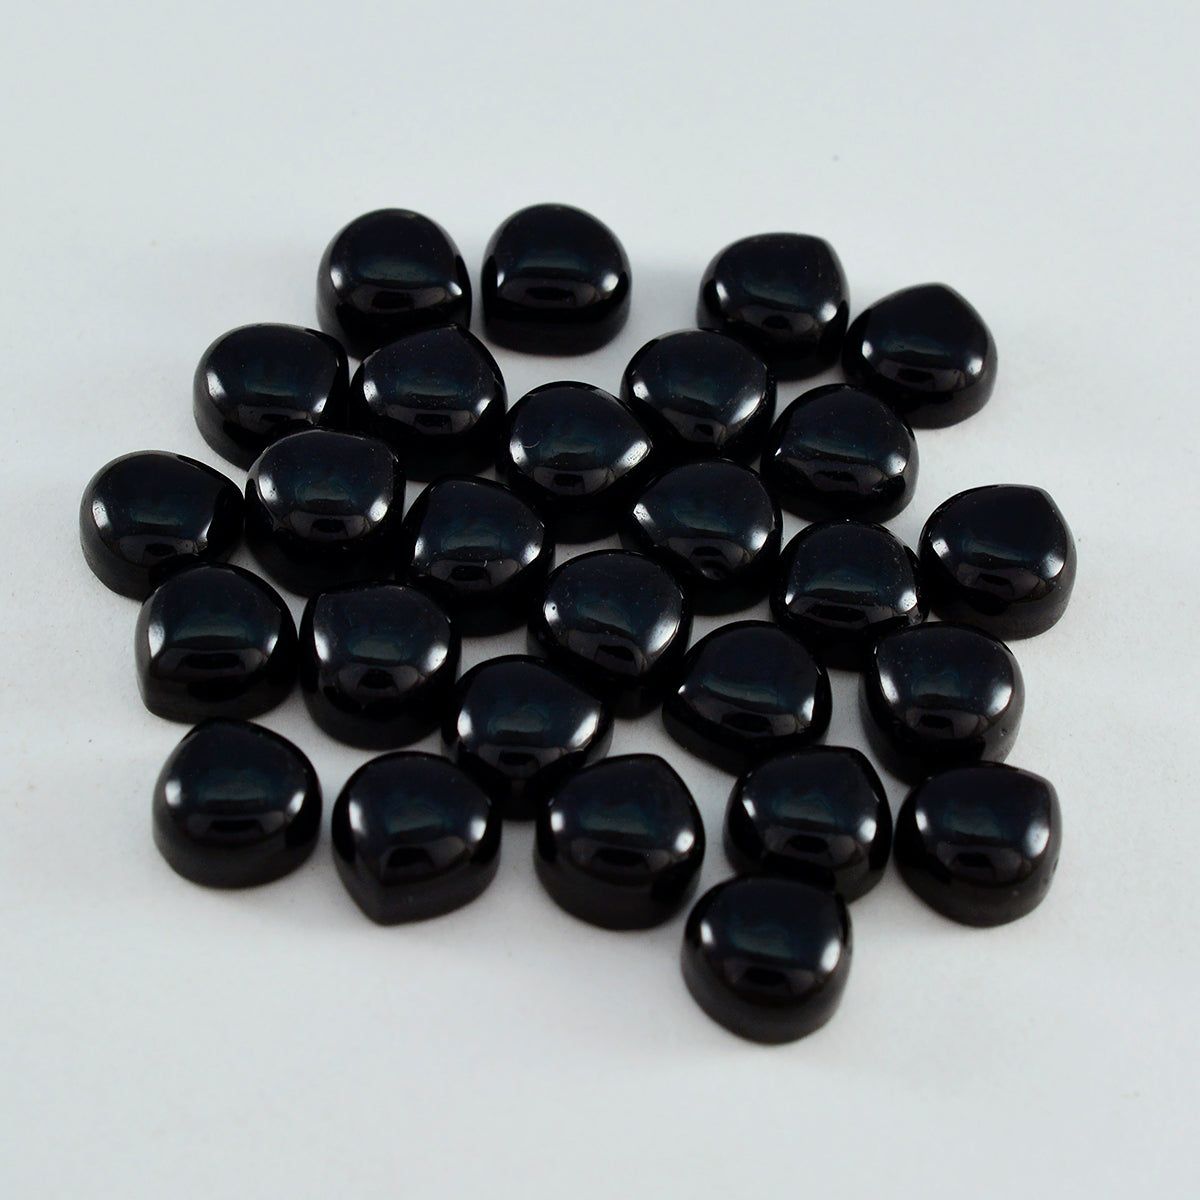 Riyogems 1PC zwarte onyx cabochon 7x7 mm hartvorm zoete kwaliteit losse edelsteen